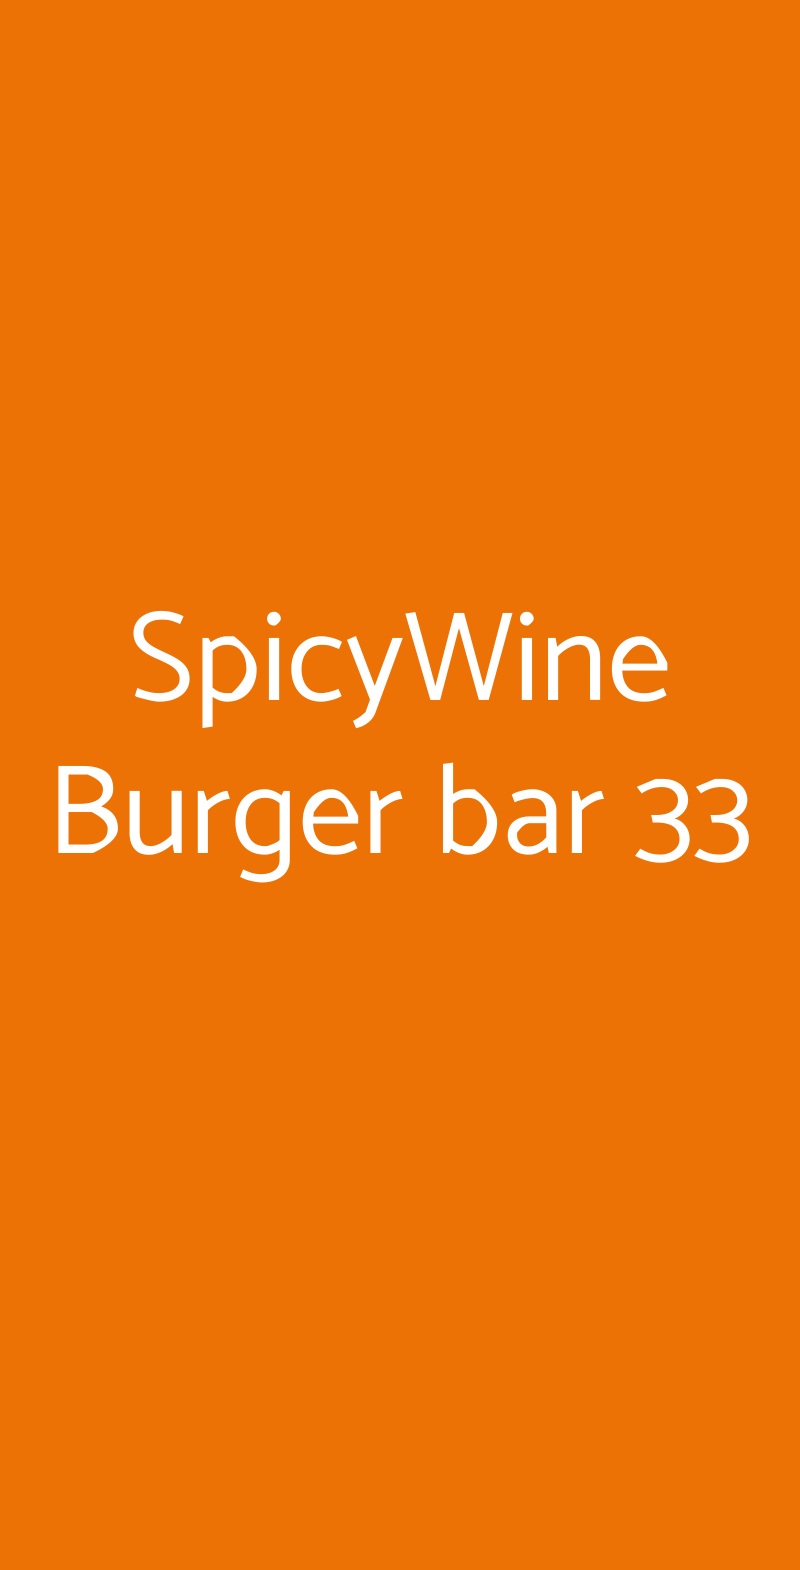 SpicyWine Burger bar 33 Olgiate Olona menù 1 pagina